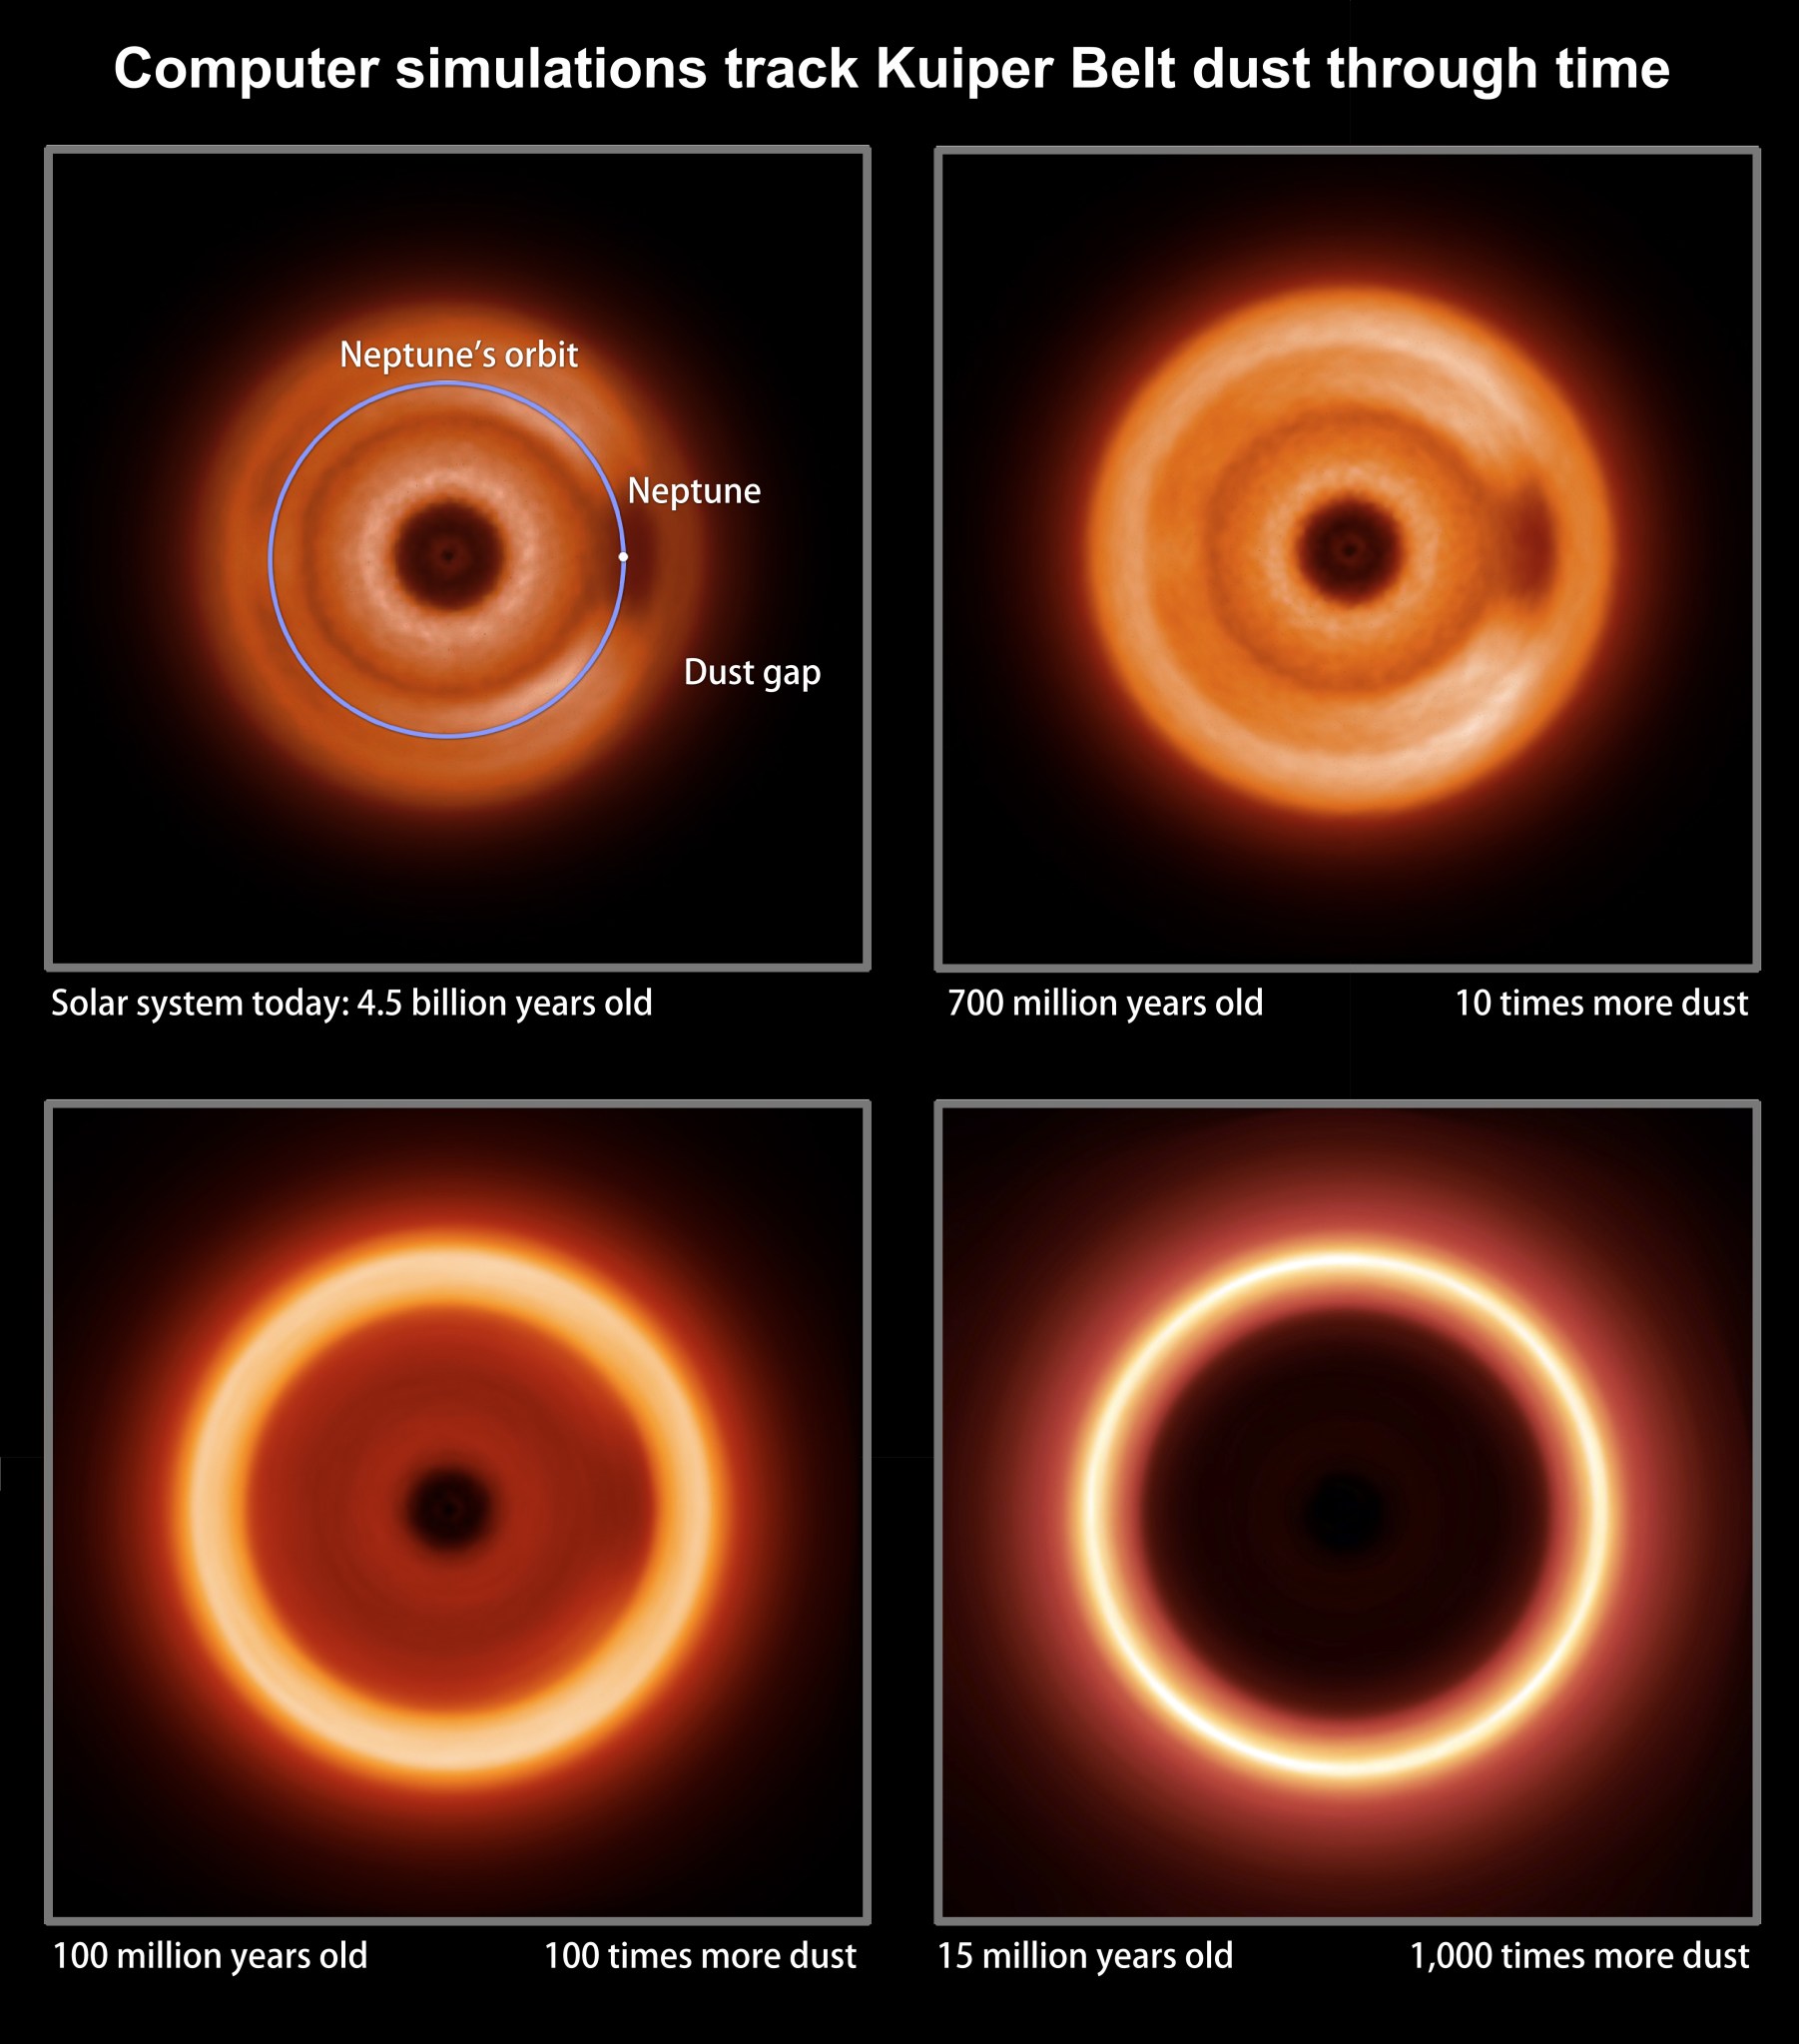 computer model images depicting Kuiper belt dust